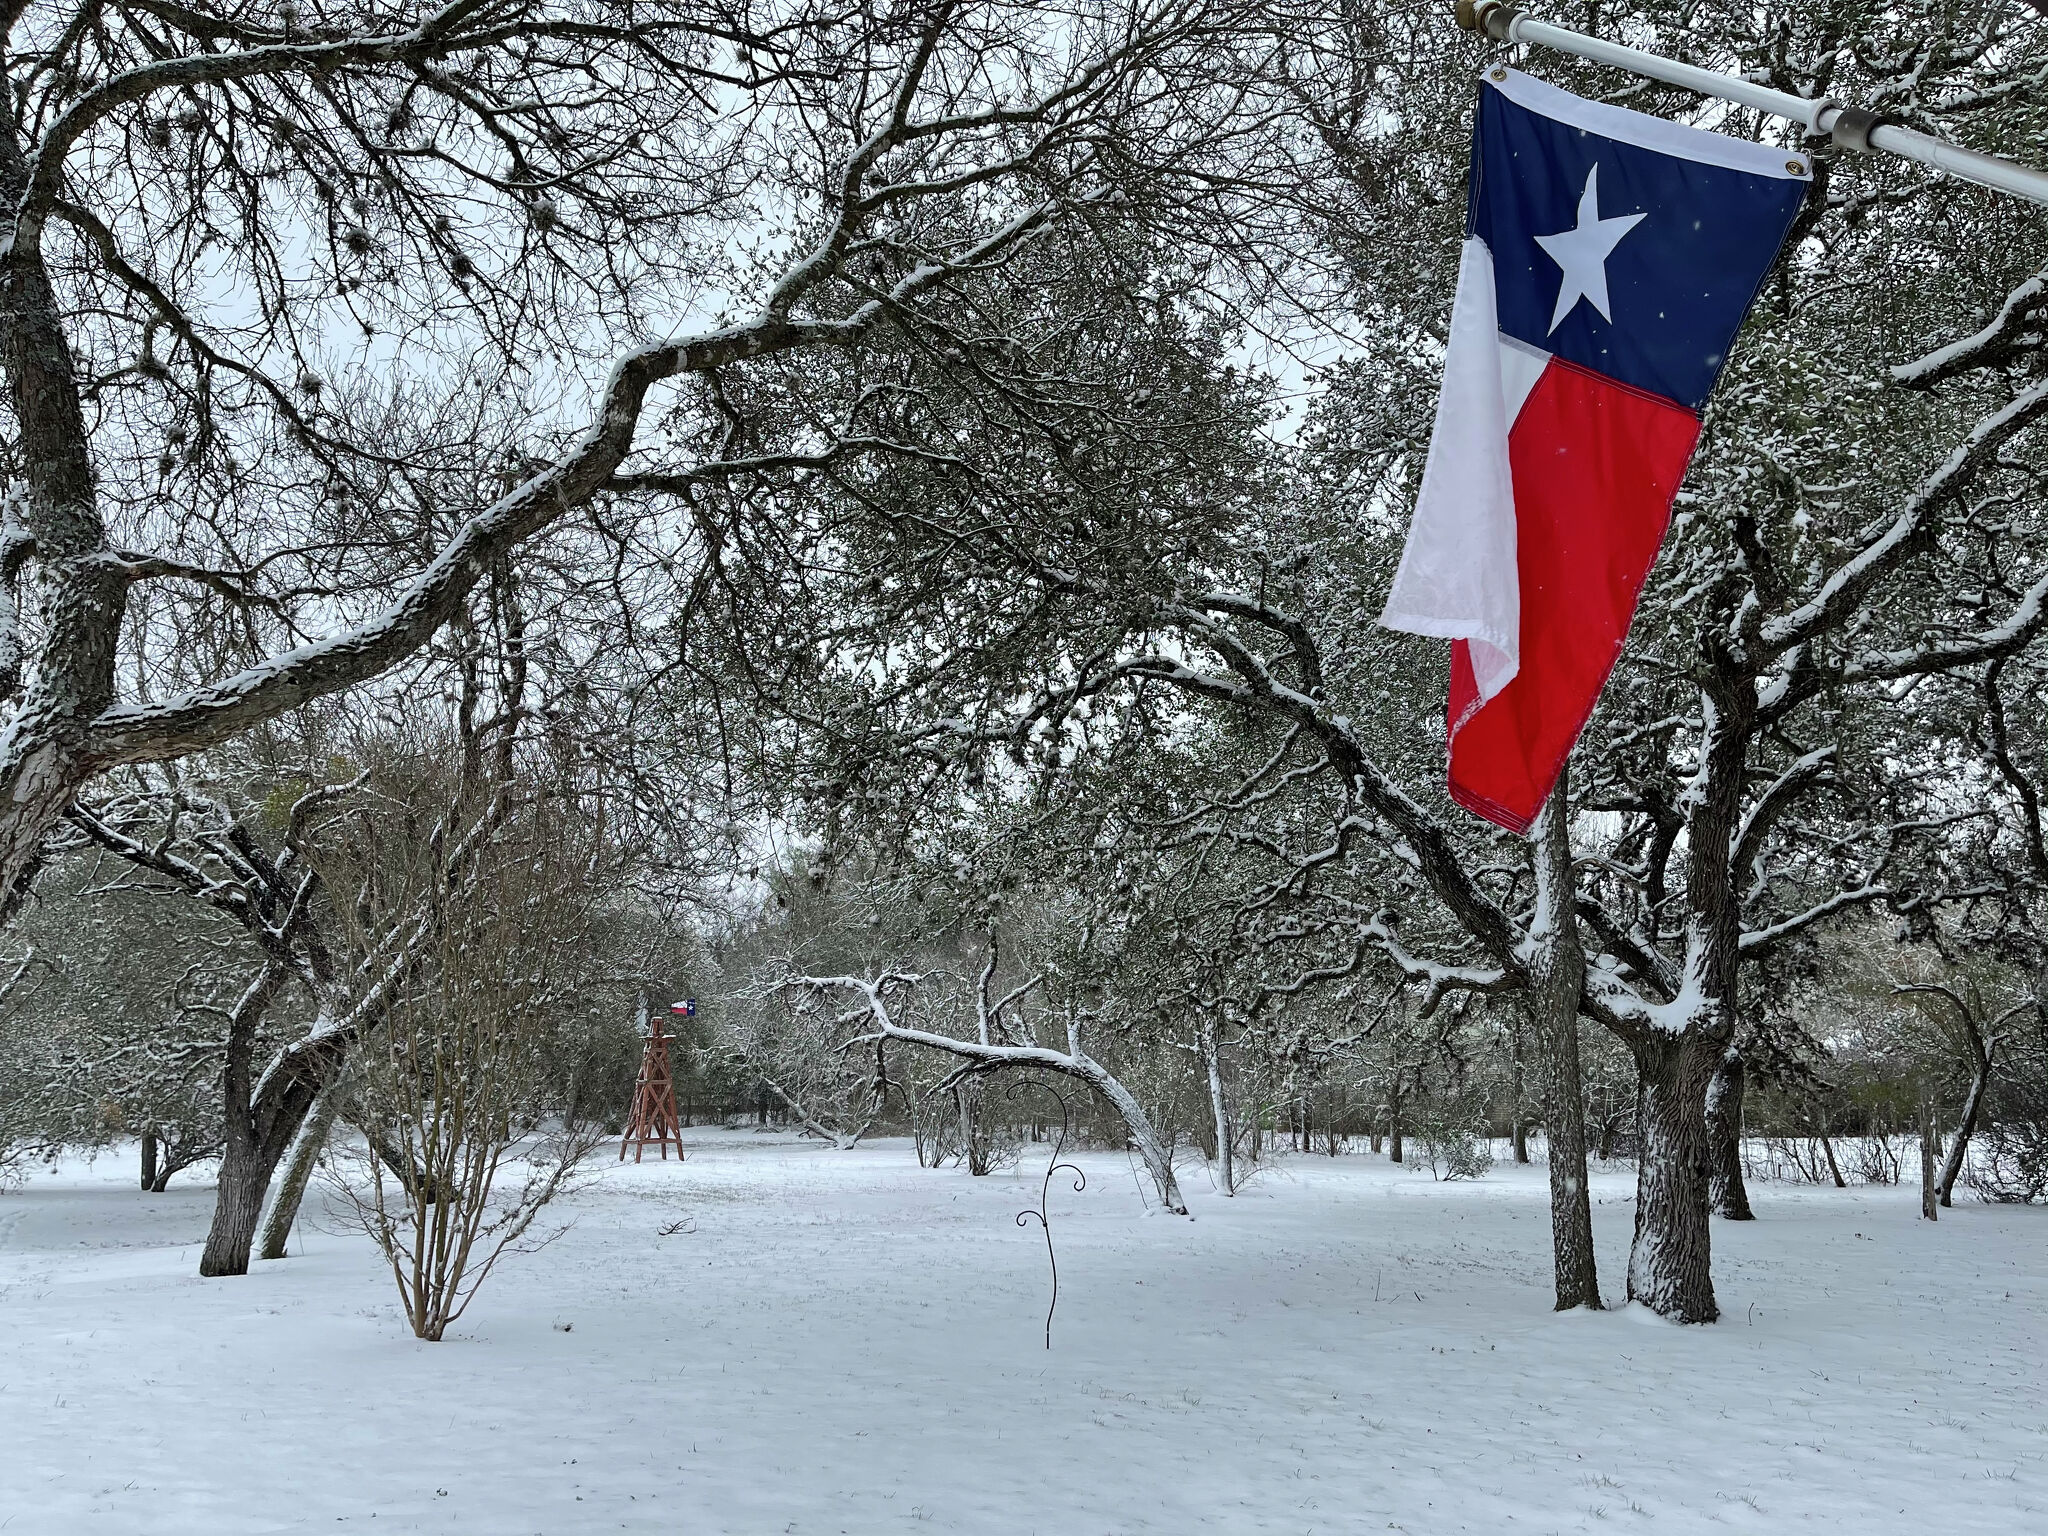 Texas may see snow, hazardous winter storm in coming week